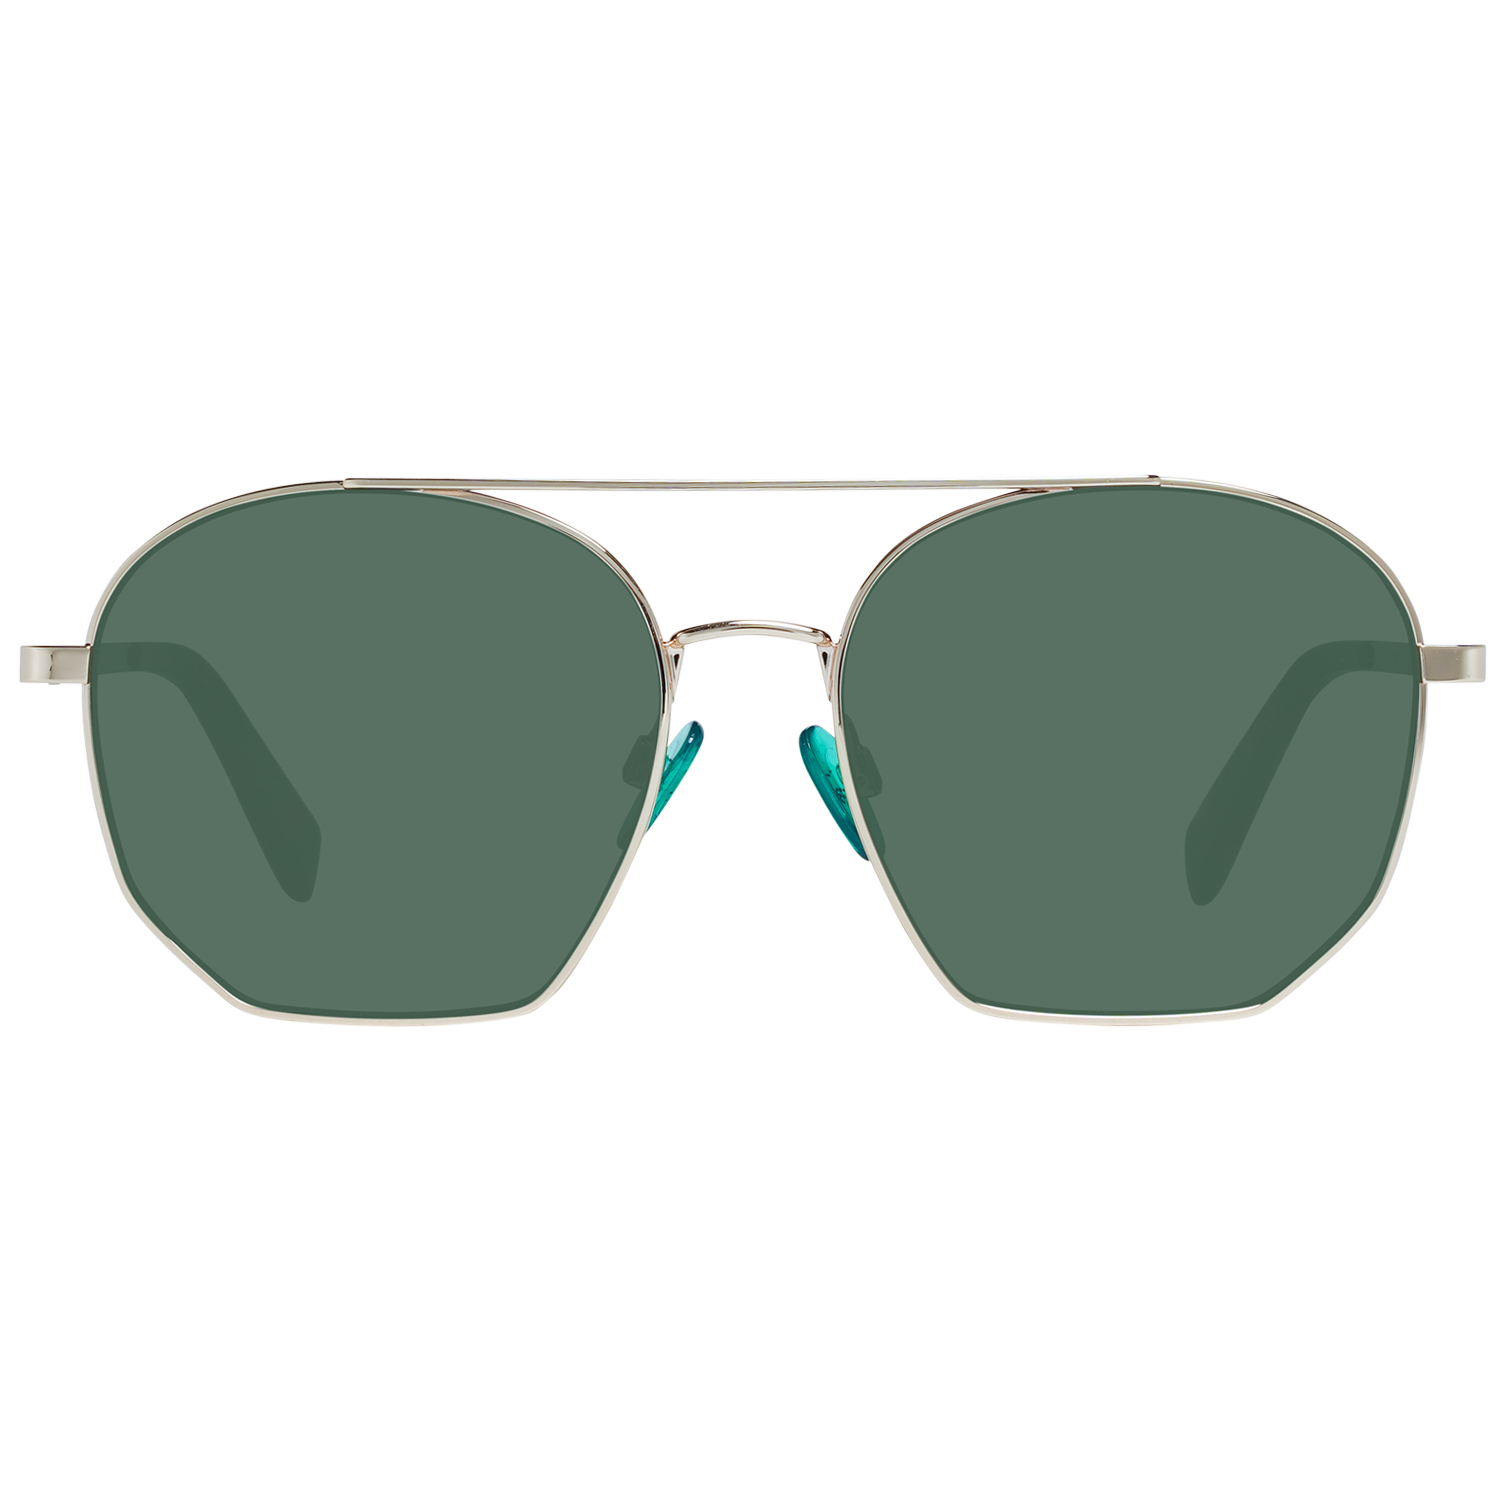 Benetton Sunglasses Benetton Sunglasses BE7032 402 55 Eyeglasses Eyewear UK USA Australia 